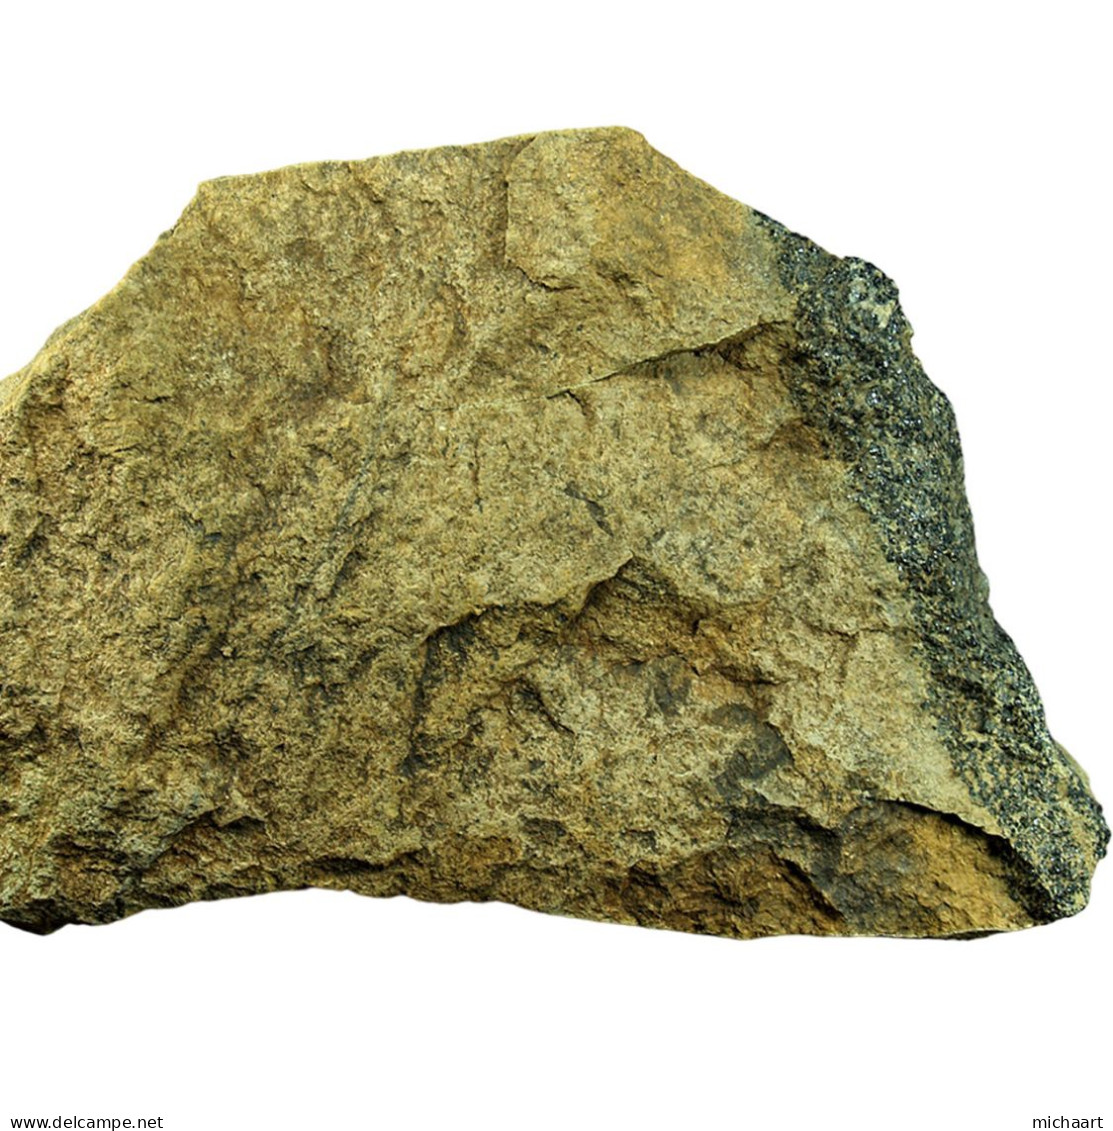 Dunite + Chromite Mineral Rock Specimen 1264g Cyprus Troodos Ophiolite 04398 - Minerales